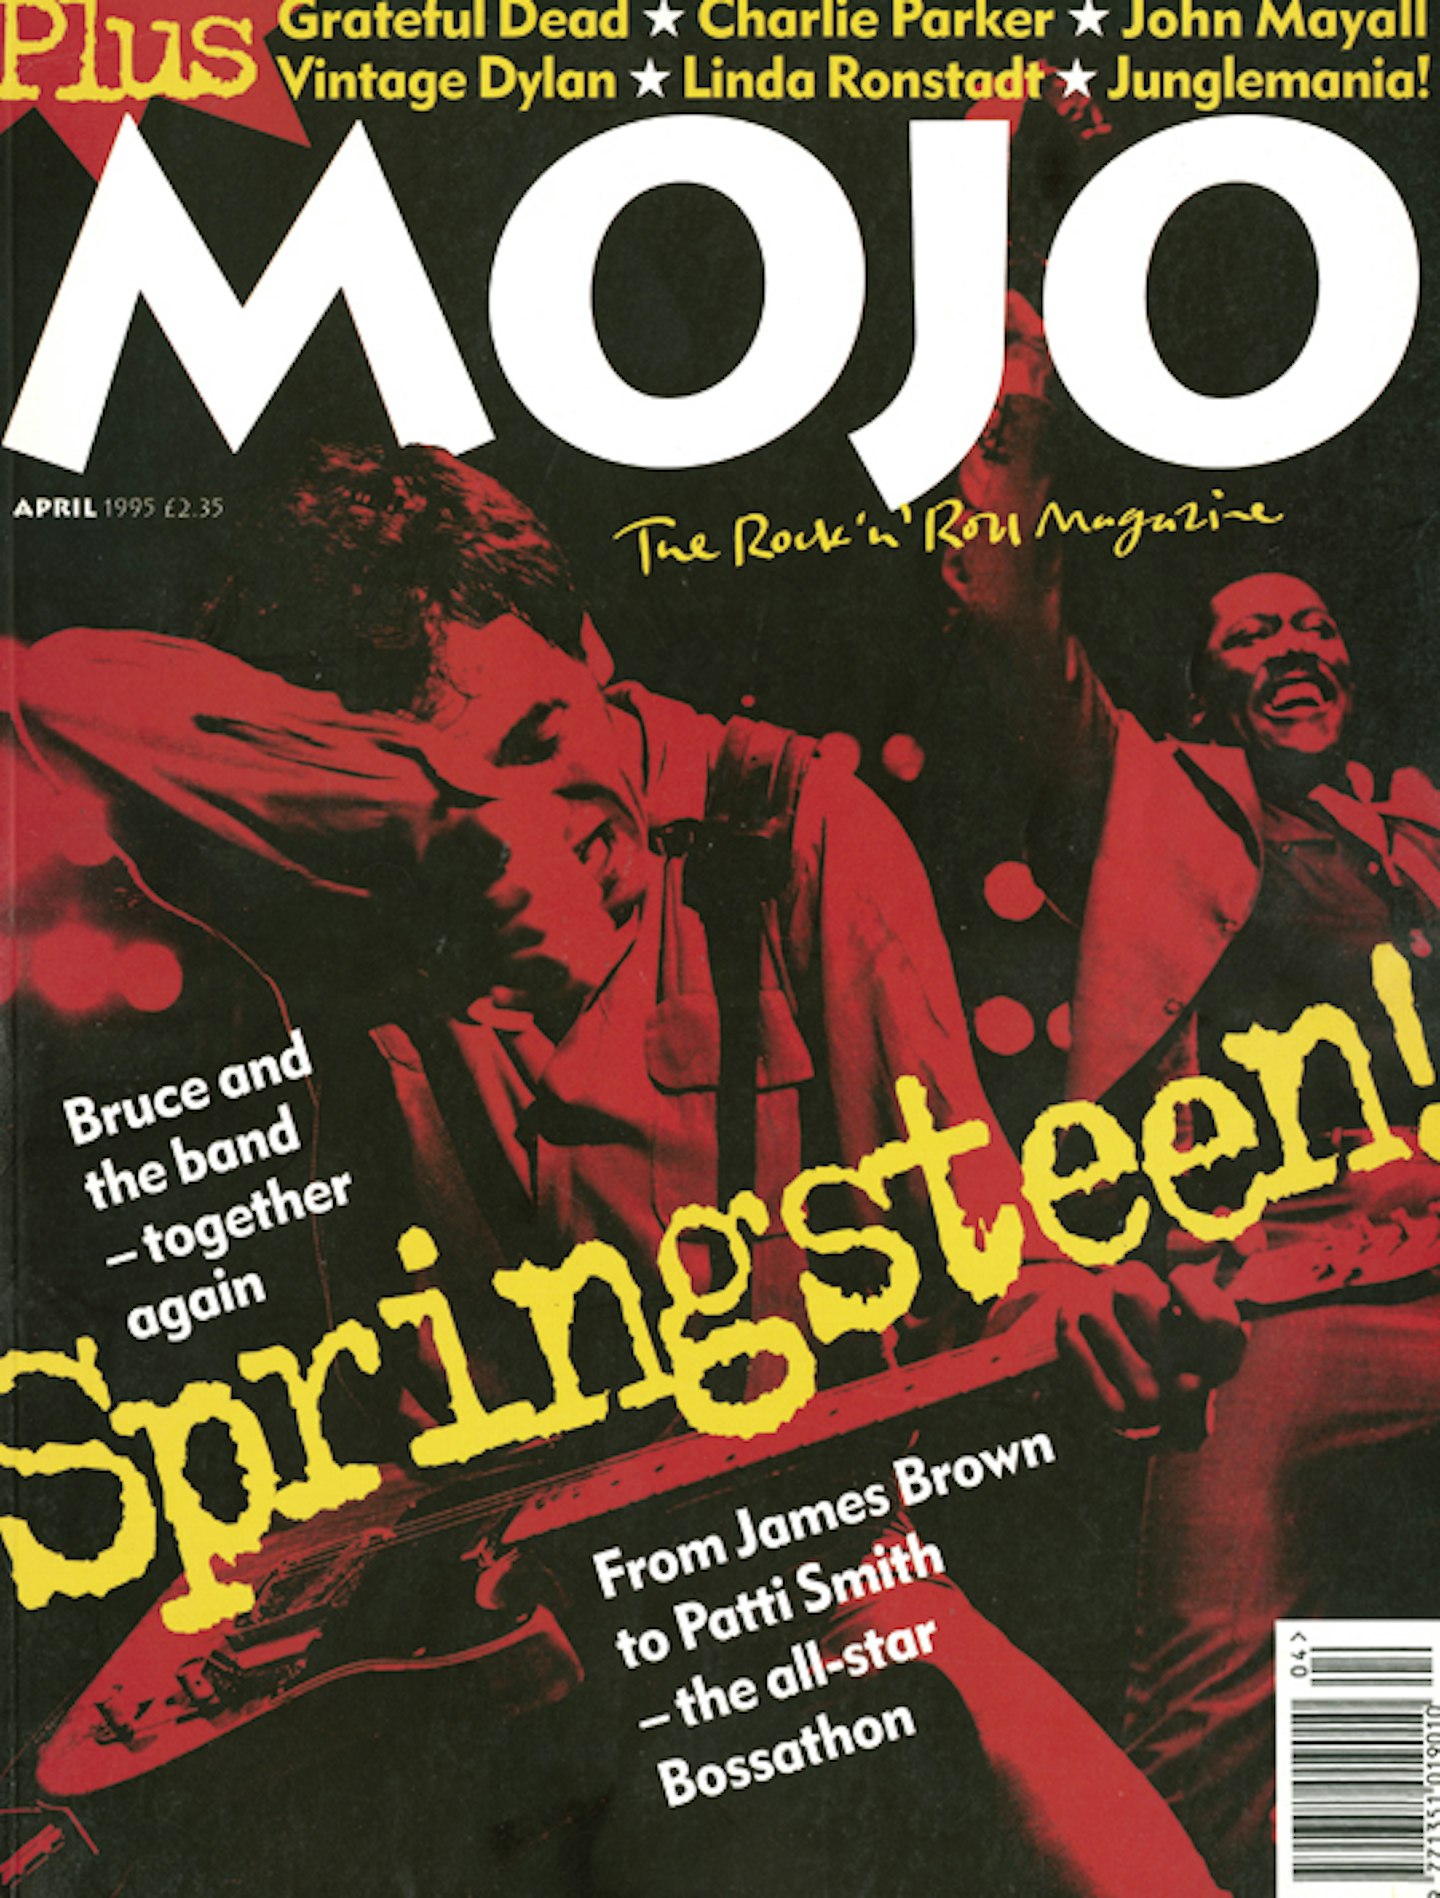 MOJO Issue 17 / April 1995